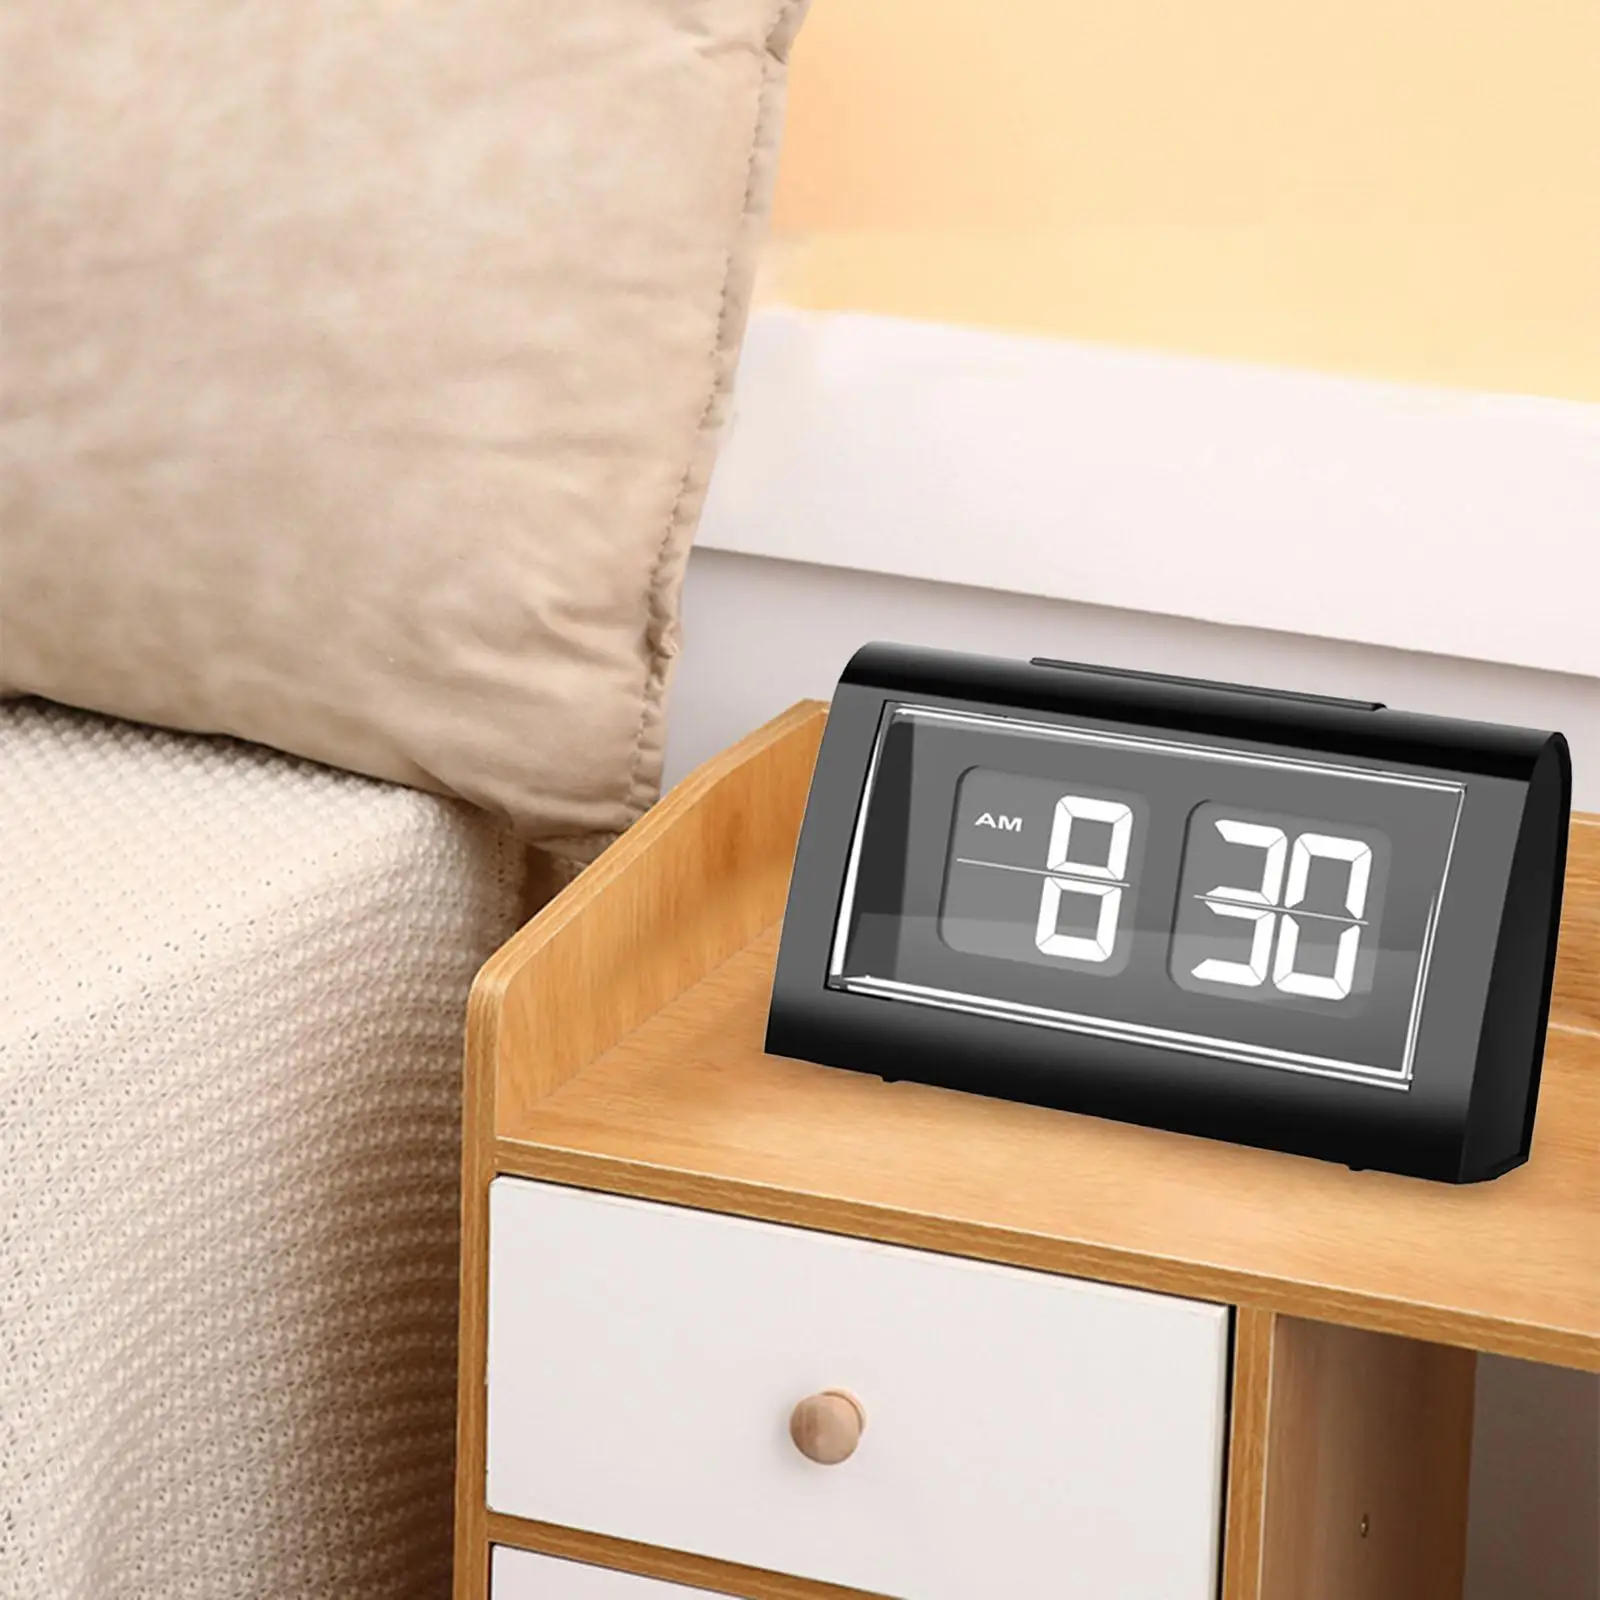 Flip Desk Clock Battery Powered Table Clock Snooze Clock Large Display Auto Flip Digital Alarm Clock for Hotel Home Office Works